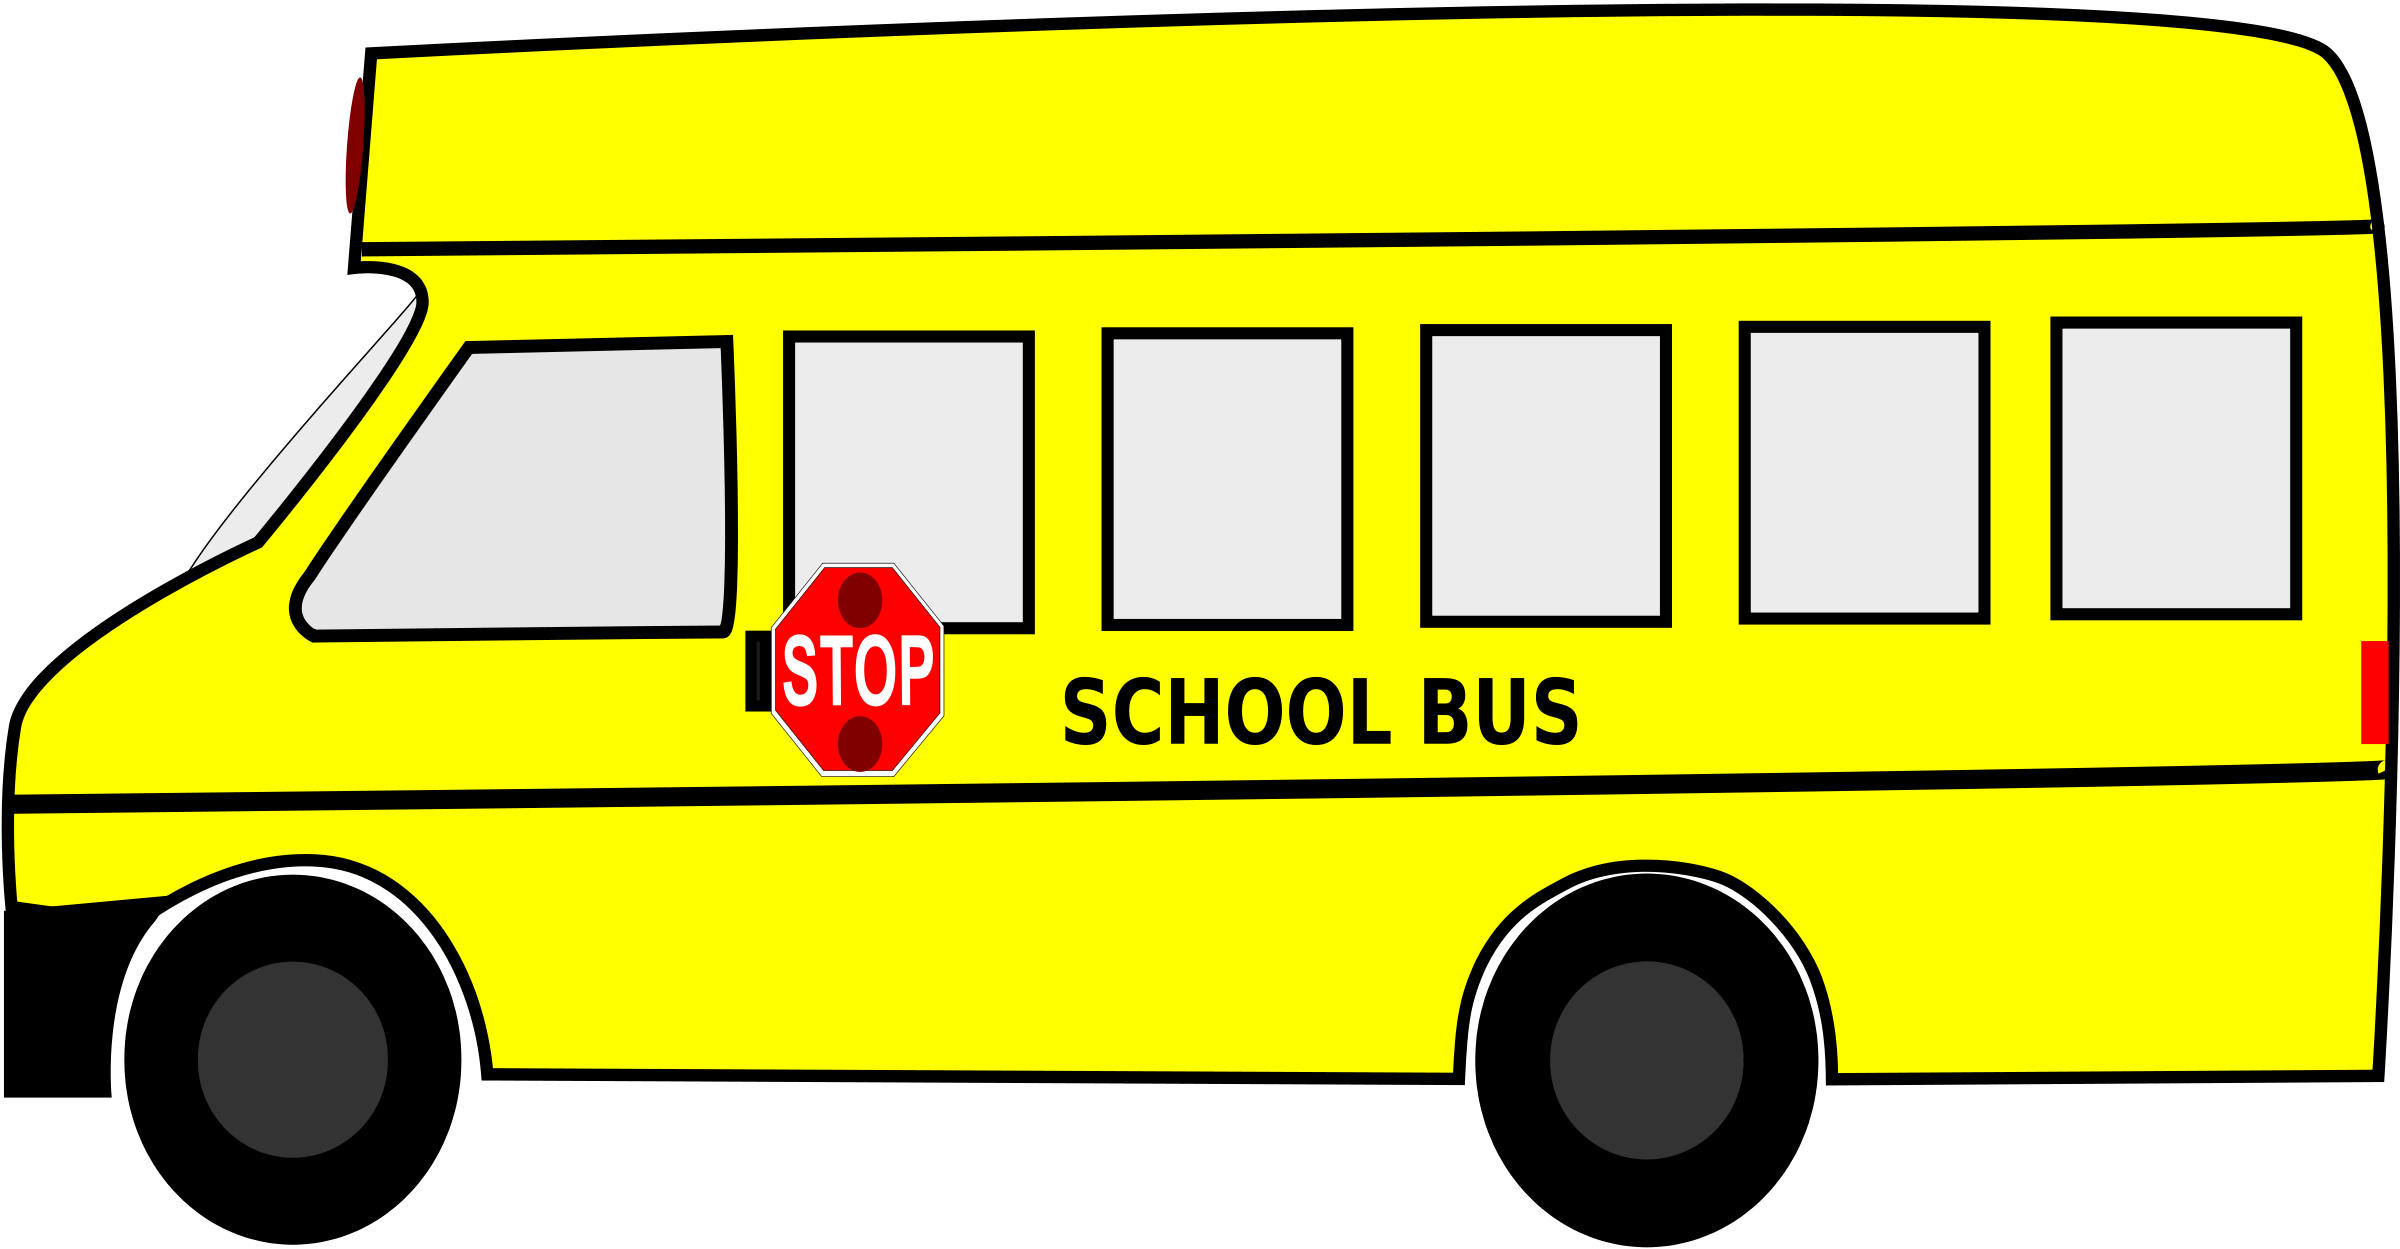 School Bus Clip Art Black And White - Free Clipart ...